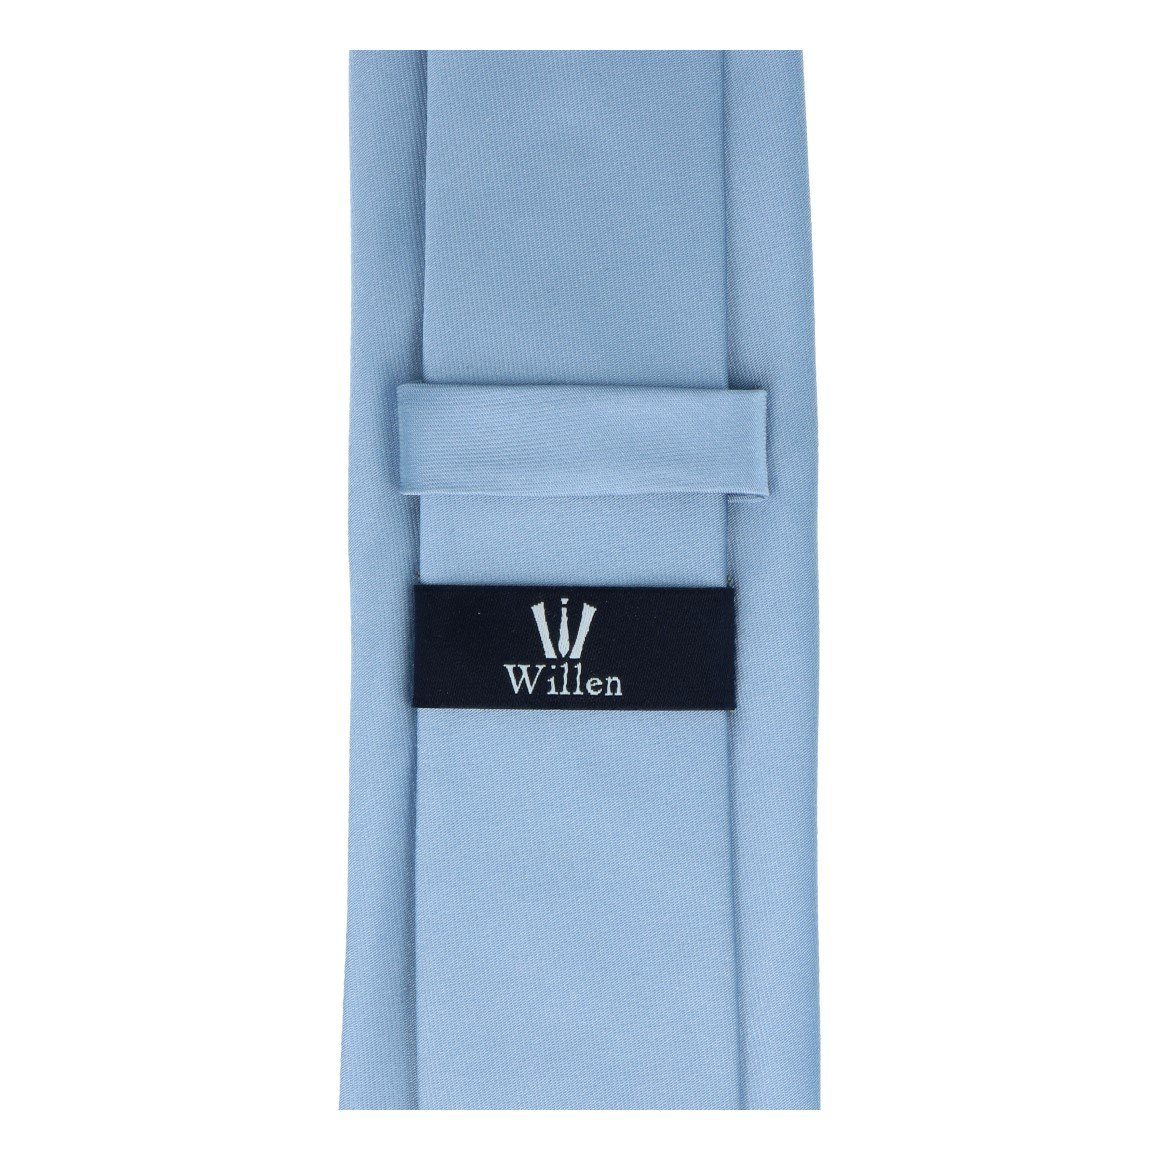 WILLEN Weste, Hemd & blau Krawatte/Fliege